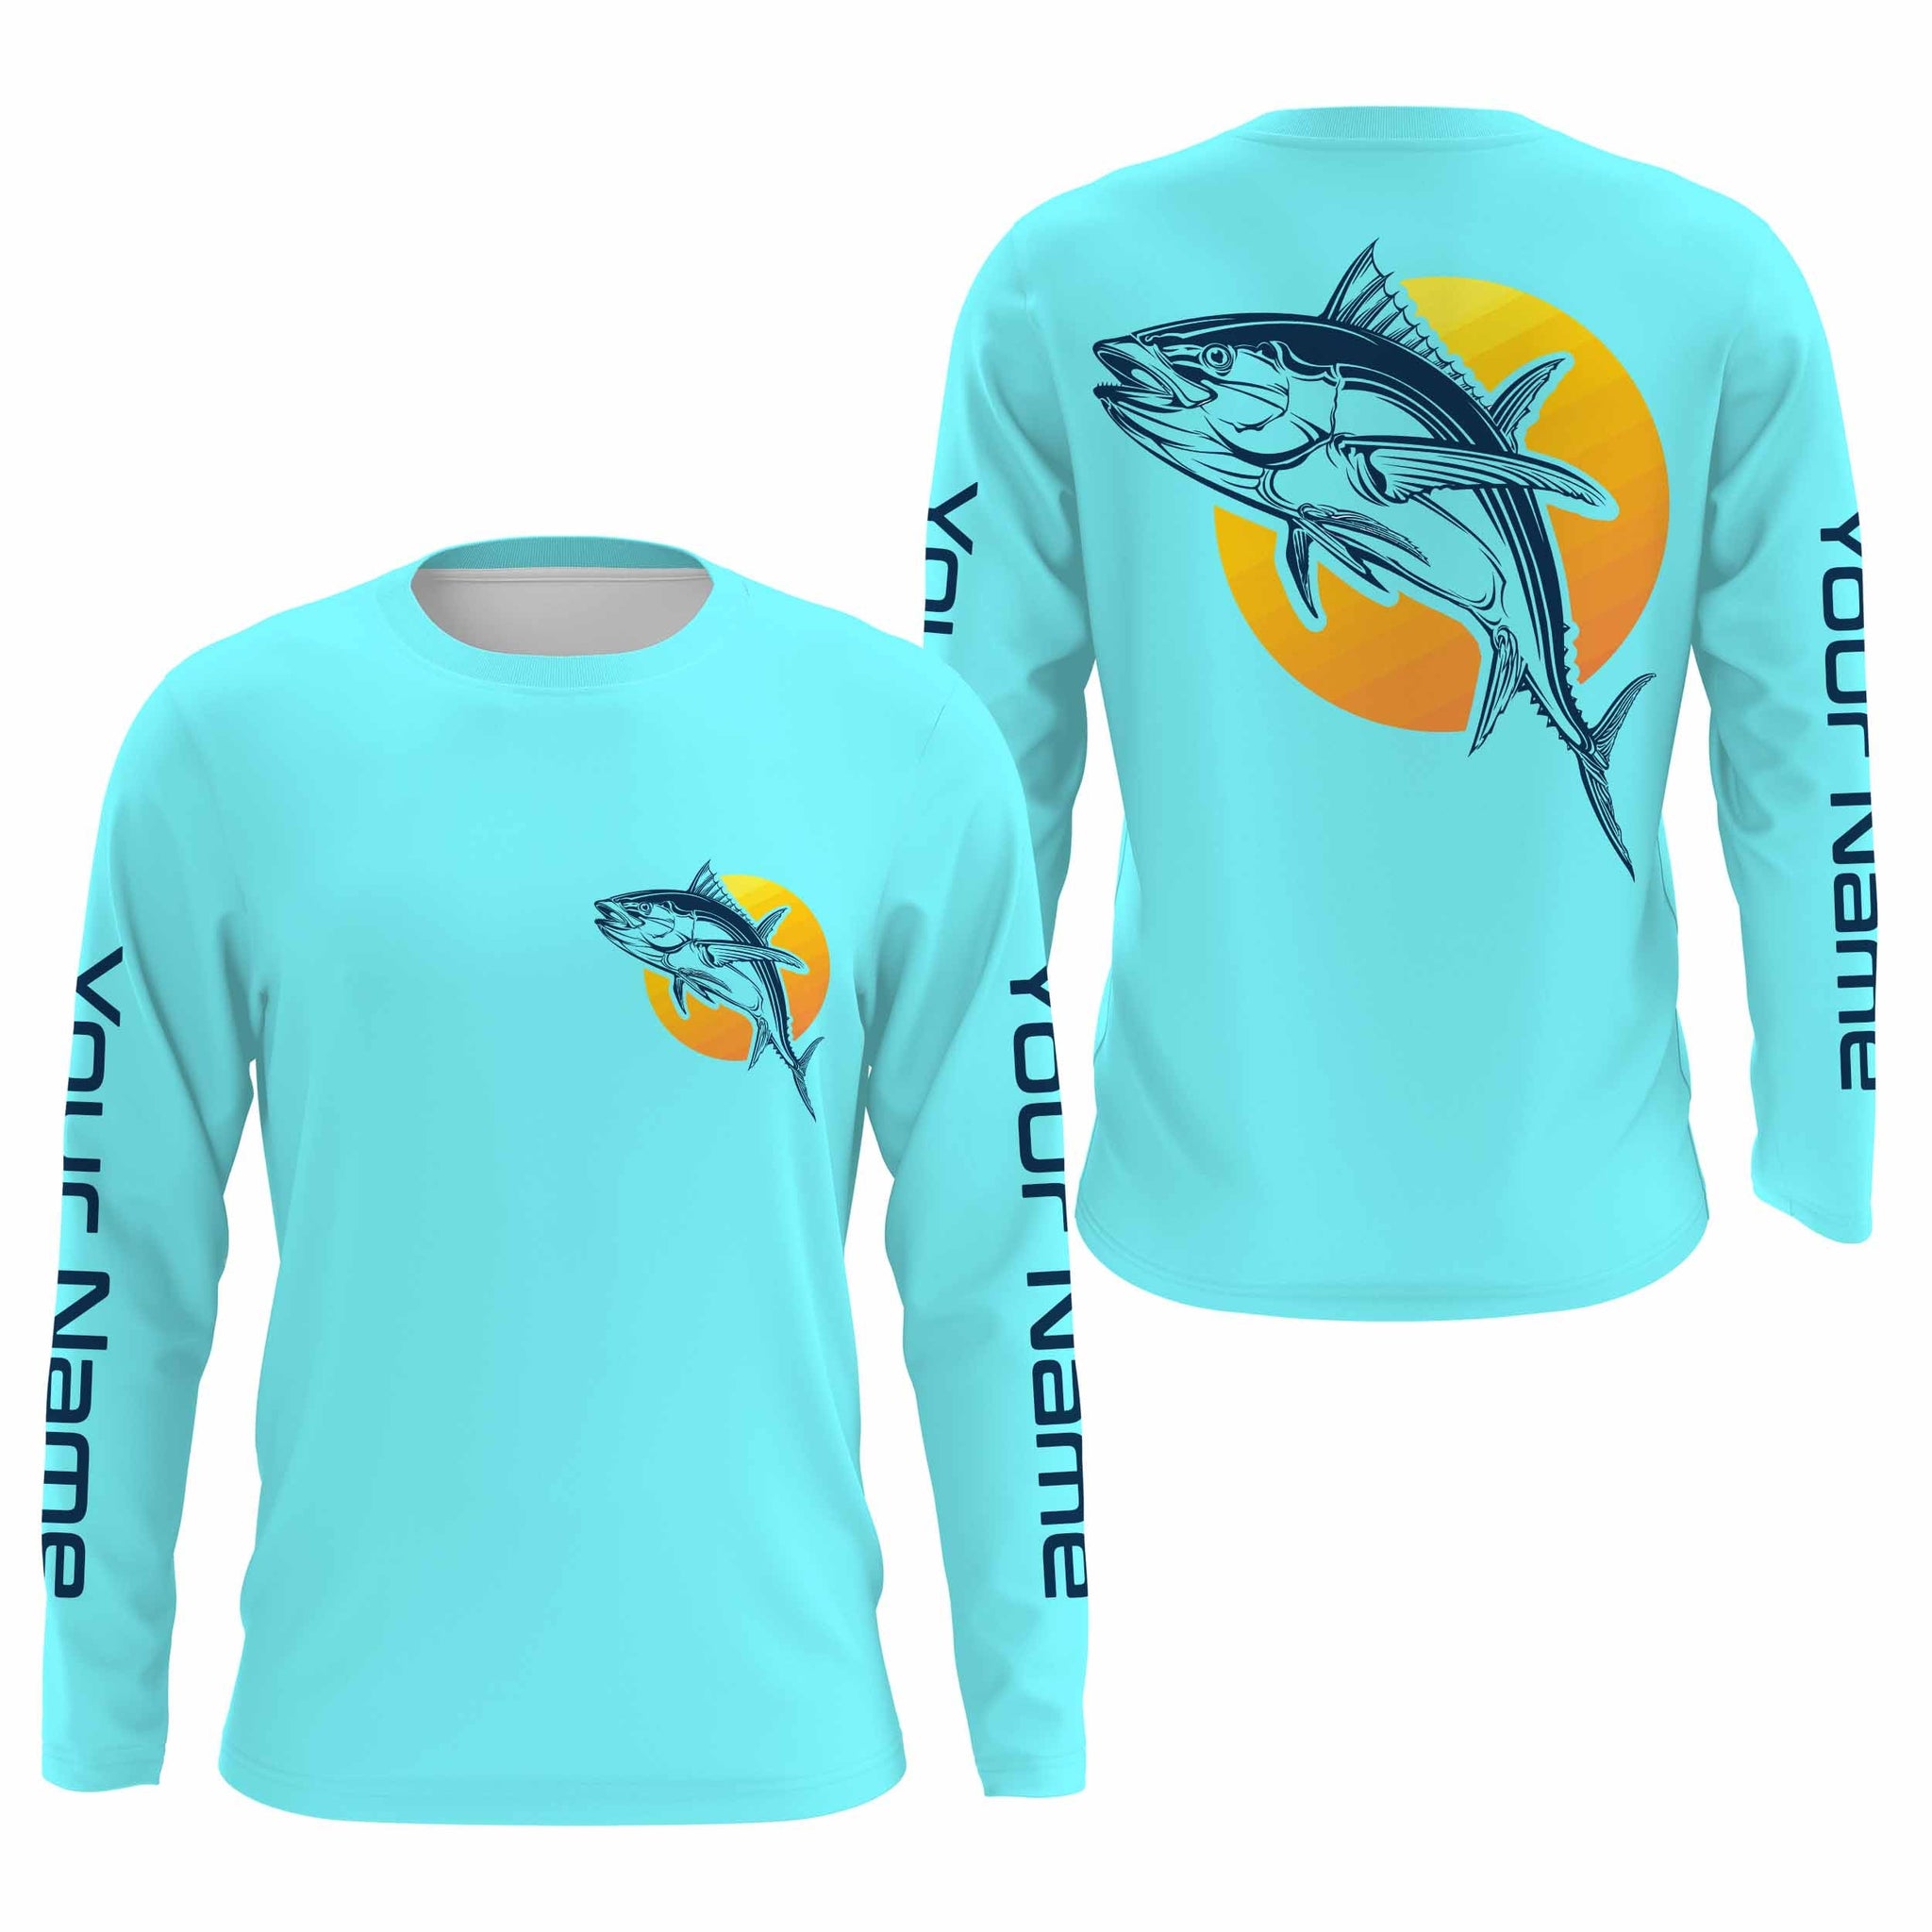  Performance fishing shirts for men long sleeve fishing